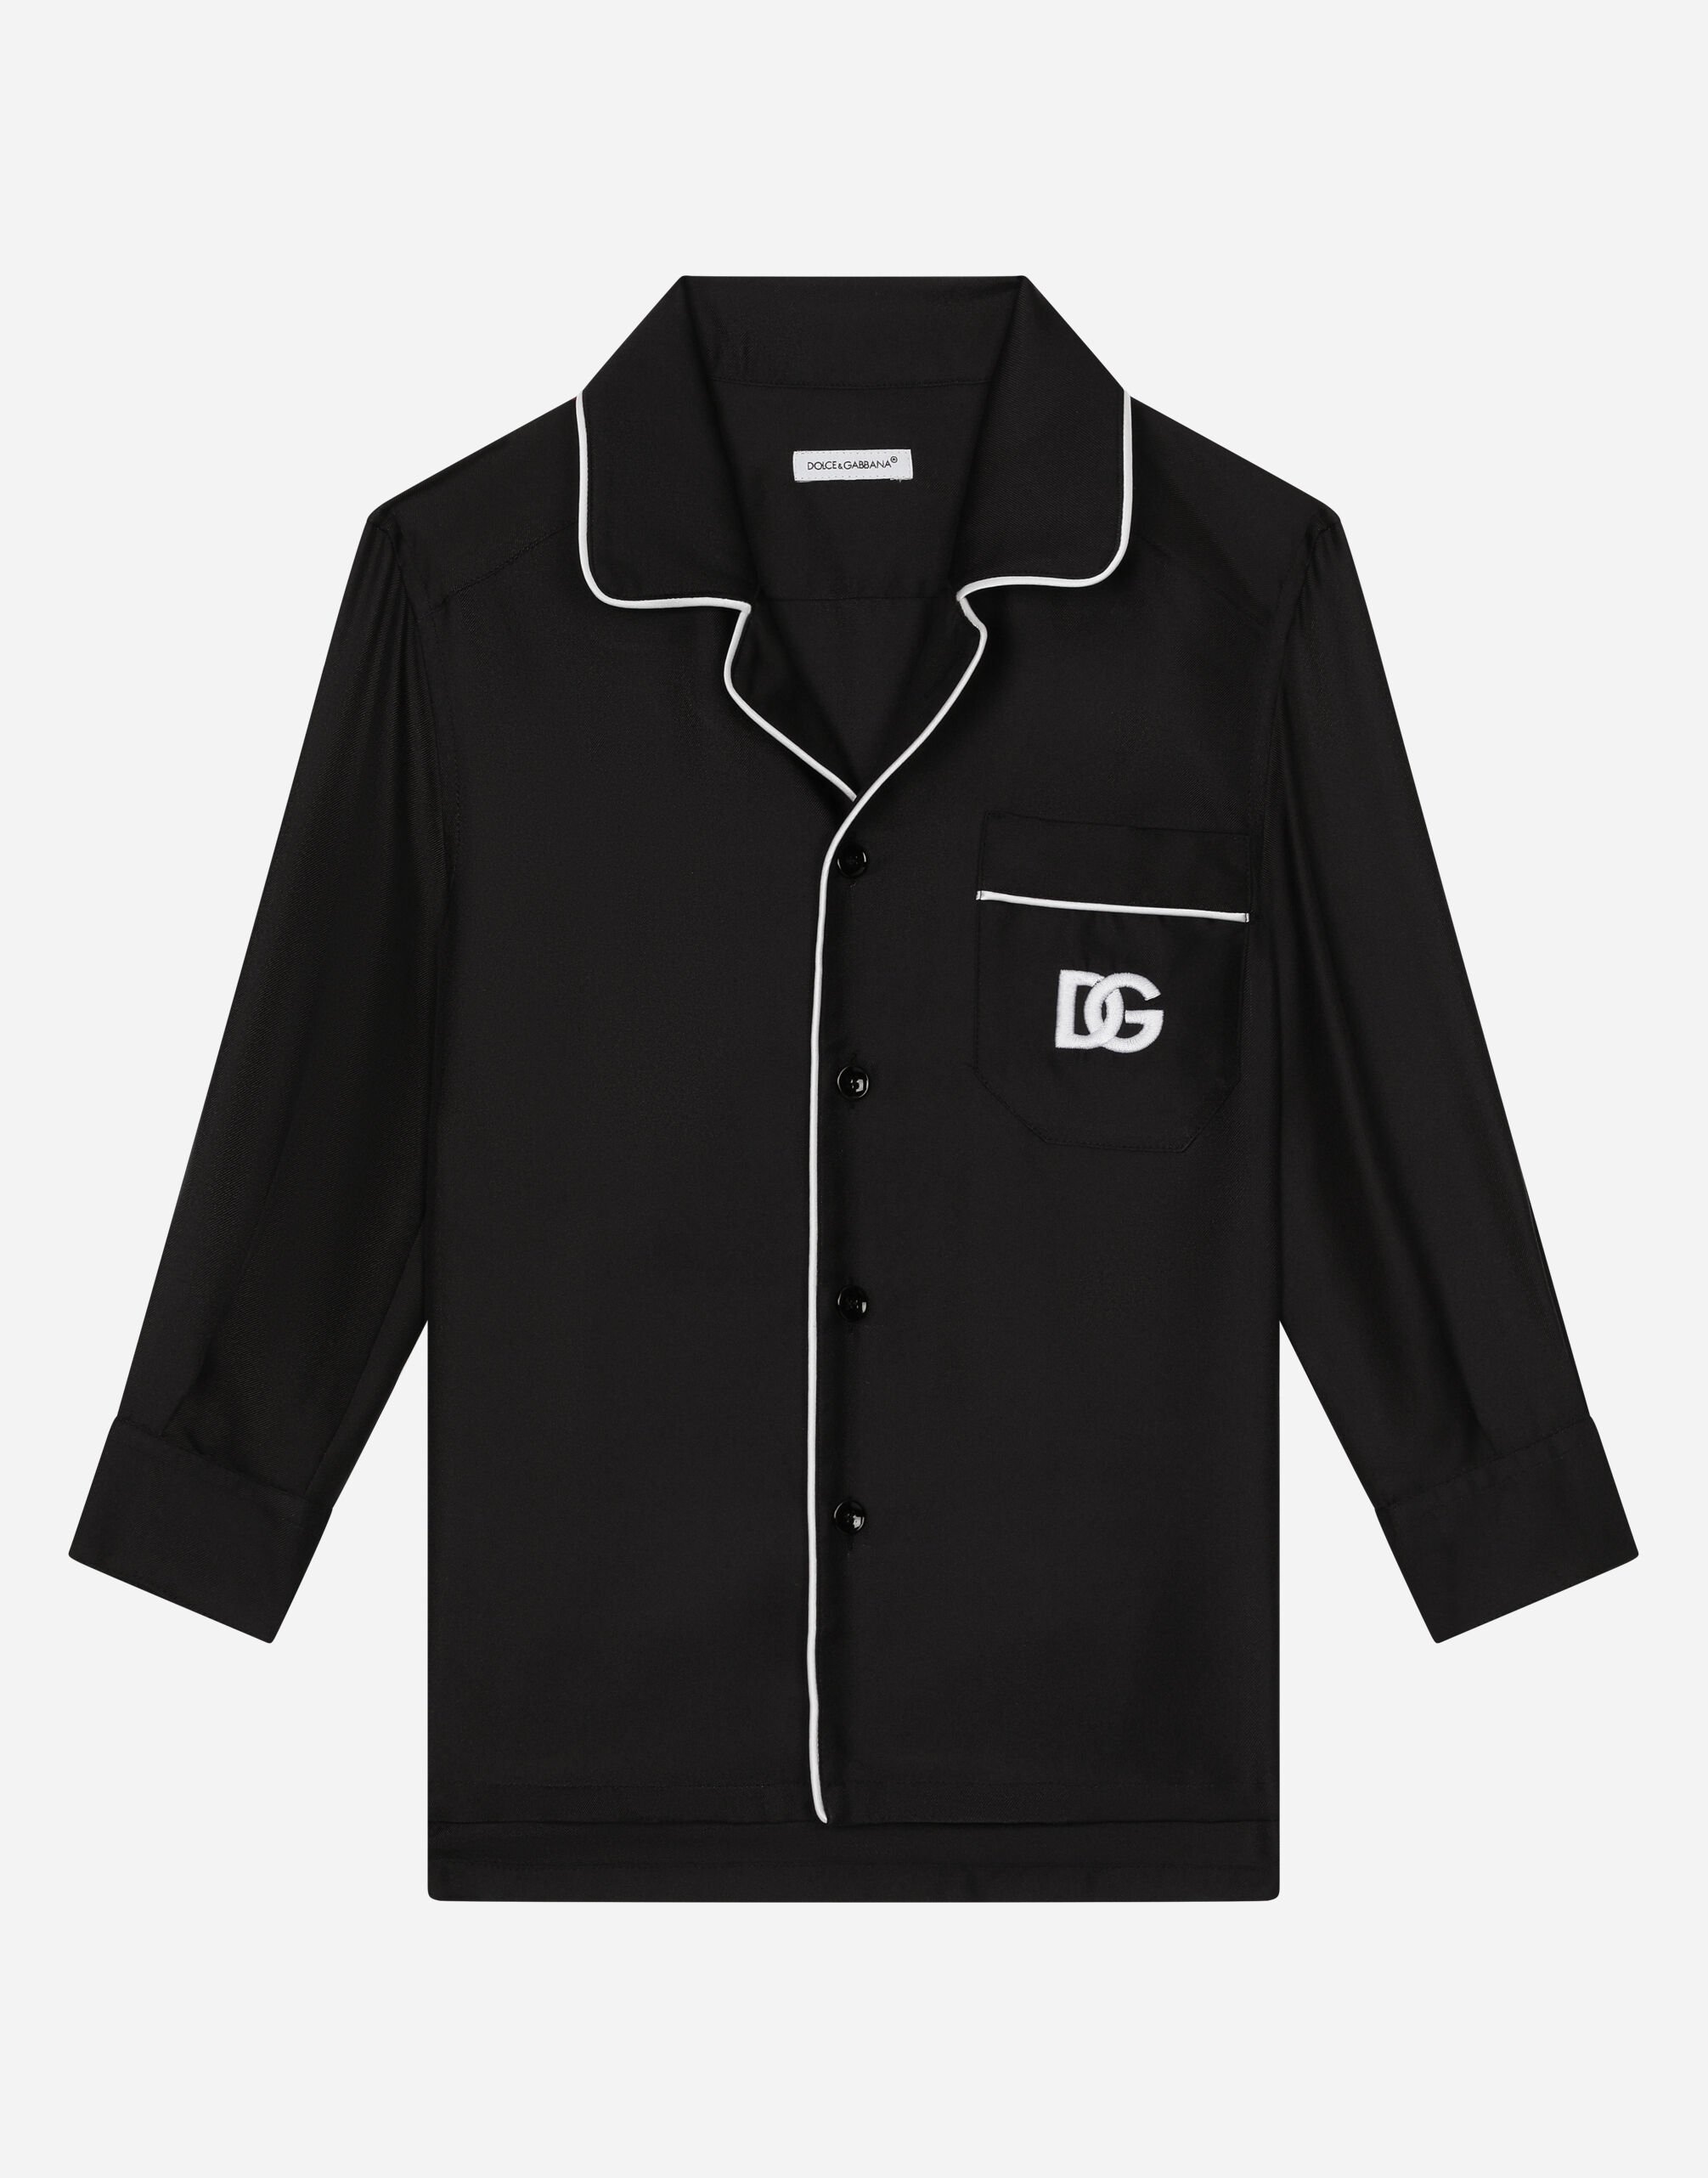 Dolce & Gabbana قميص بيجامة من تويل حريري بتطريز DG مطبعة L44S11HI1S6